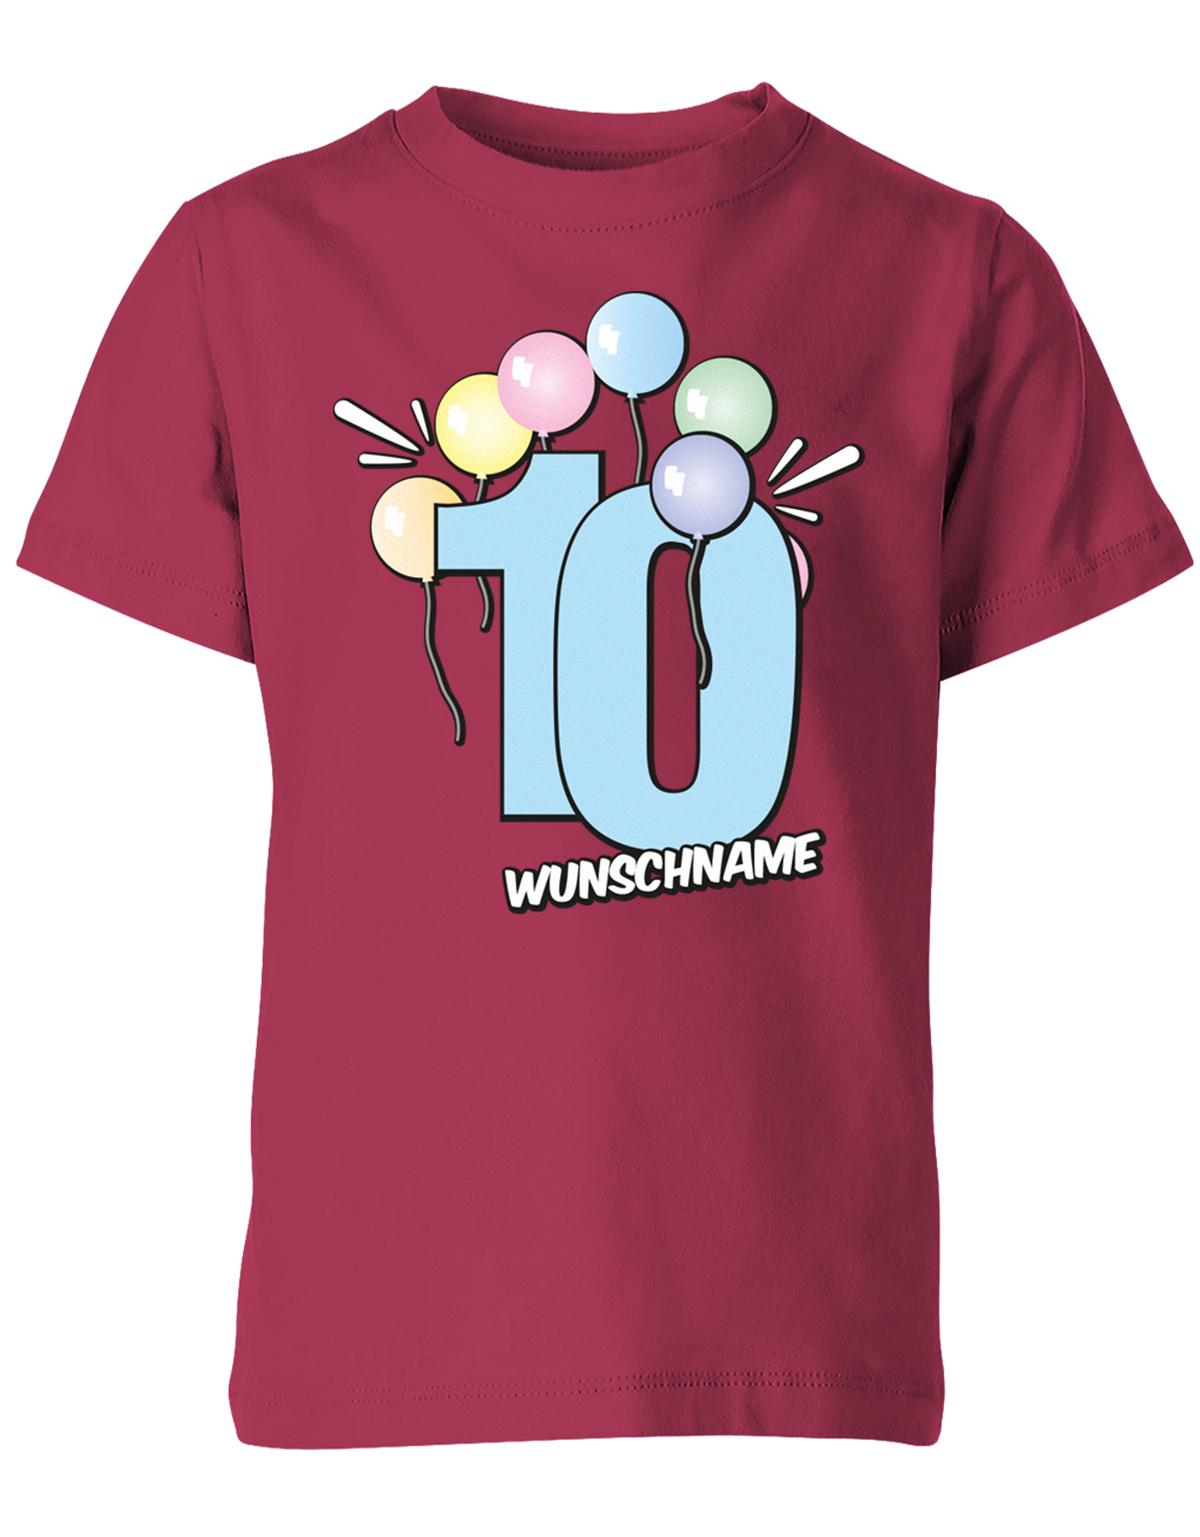 Luftballons-pastell-10-geburtstag-wunschname-kinder-shirt-sorbet